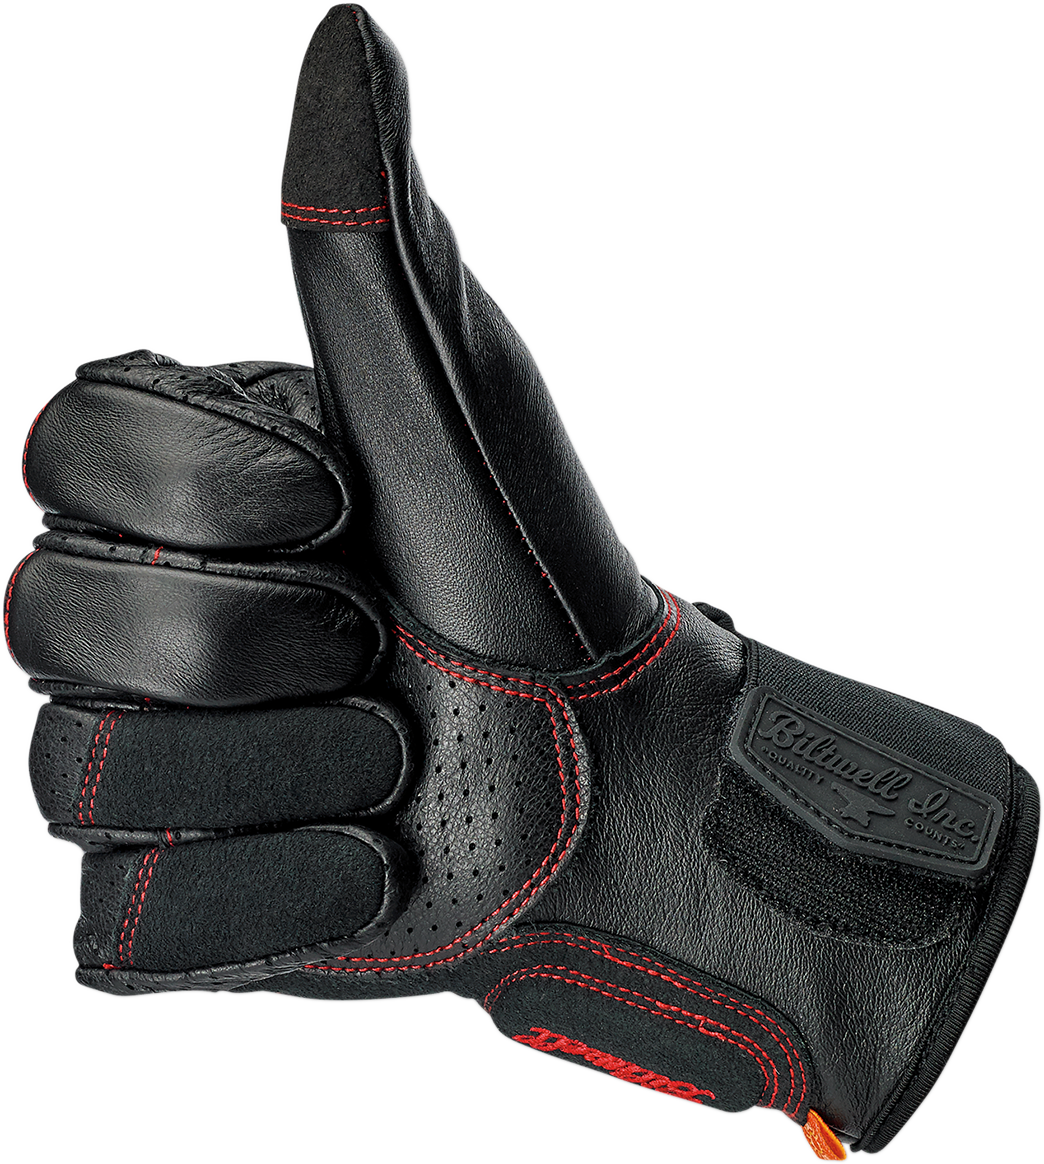 BILTWELL Borrego Gloves - Redline - Medium 1506-0108-303